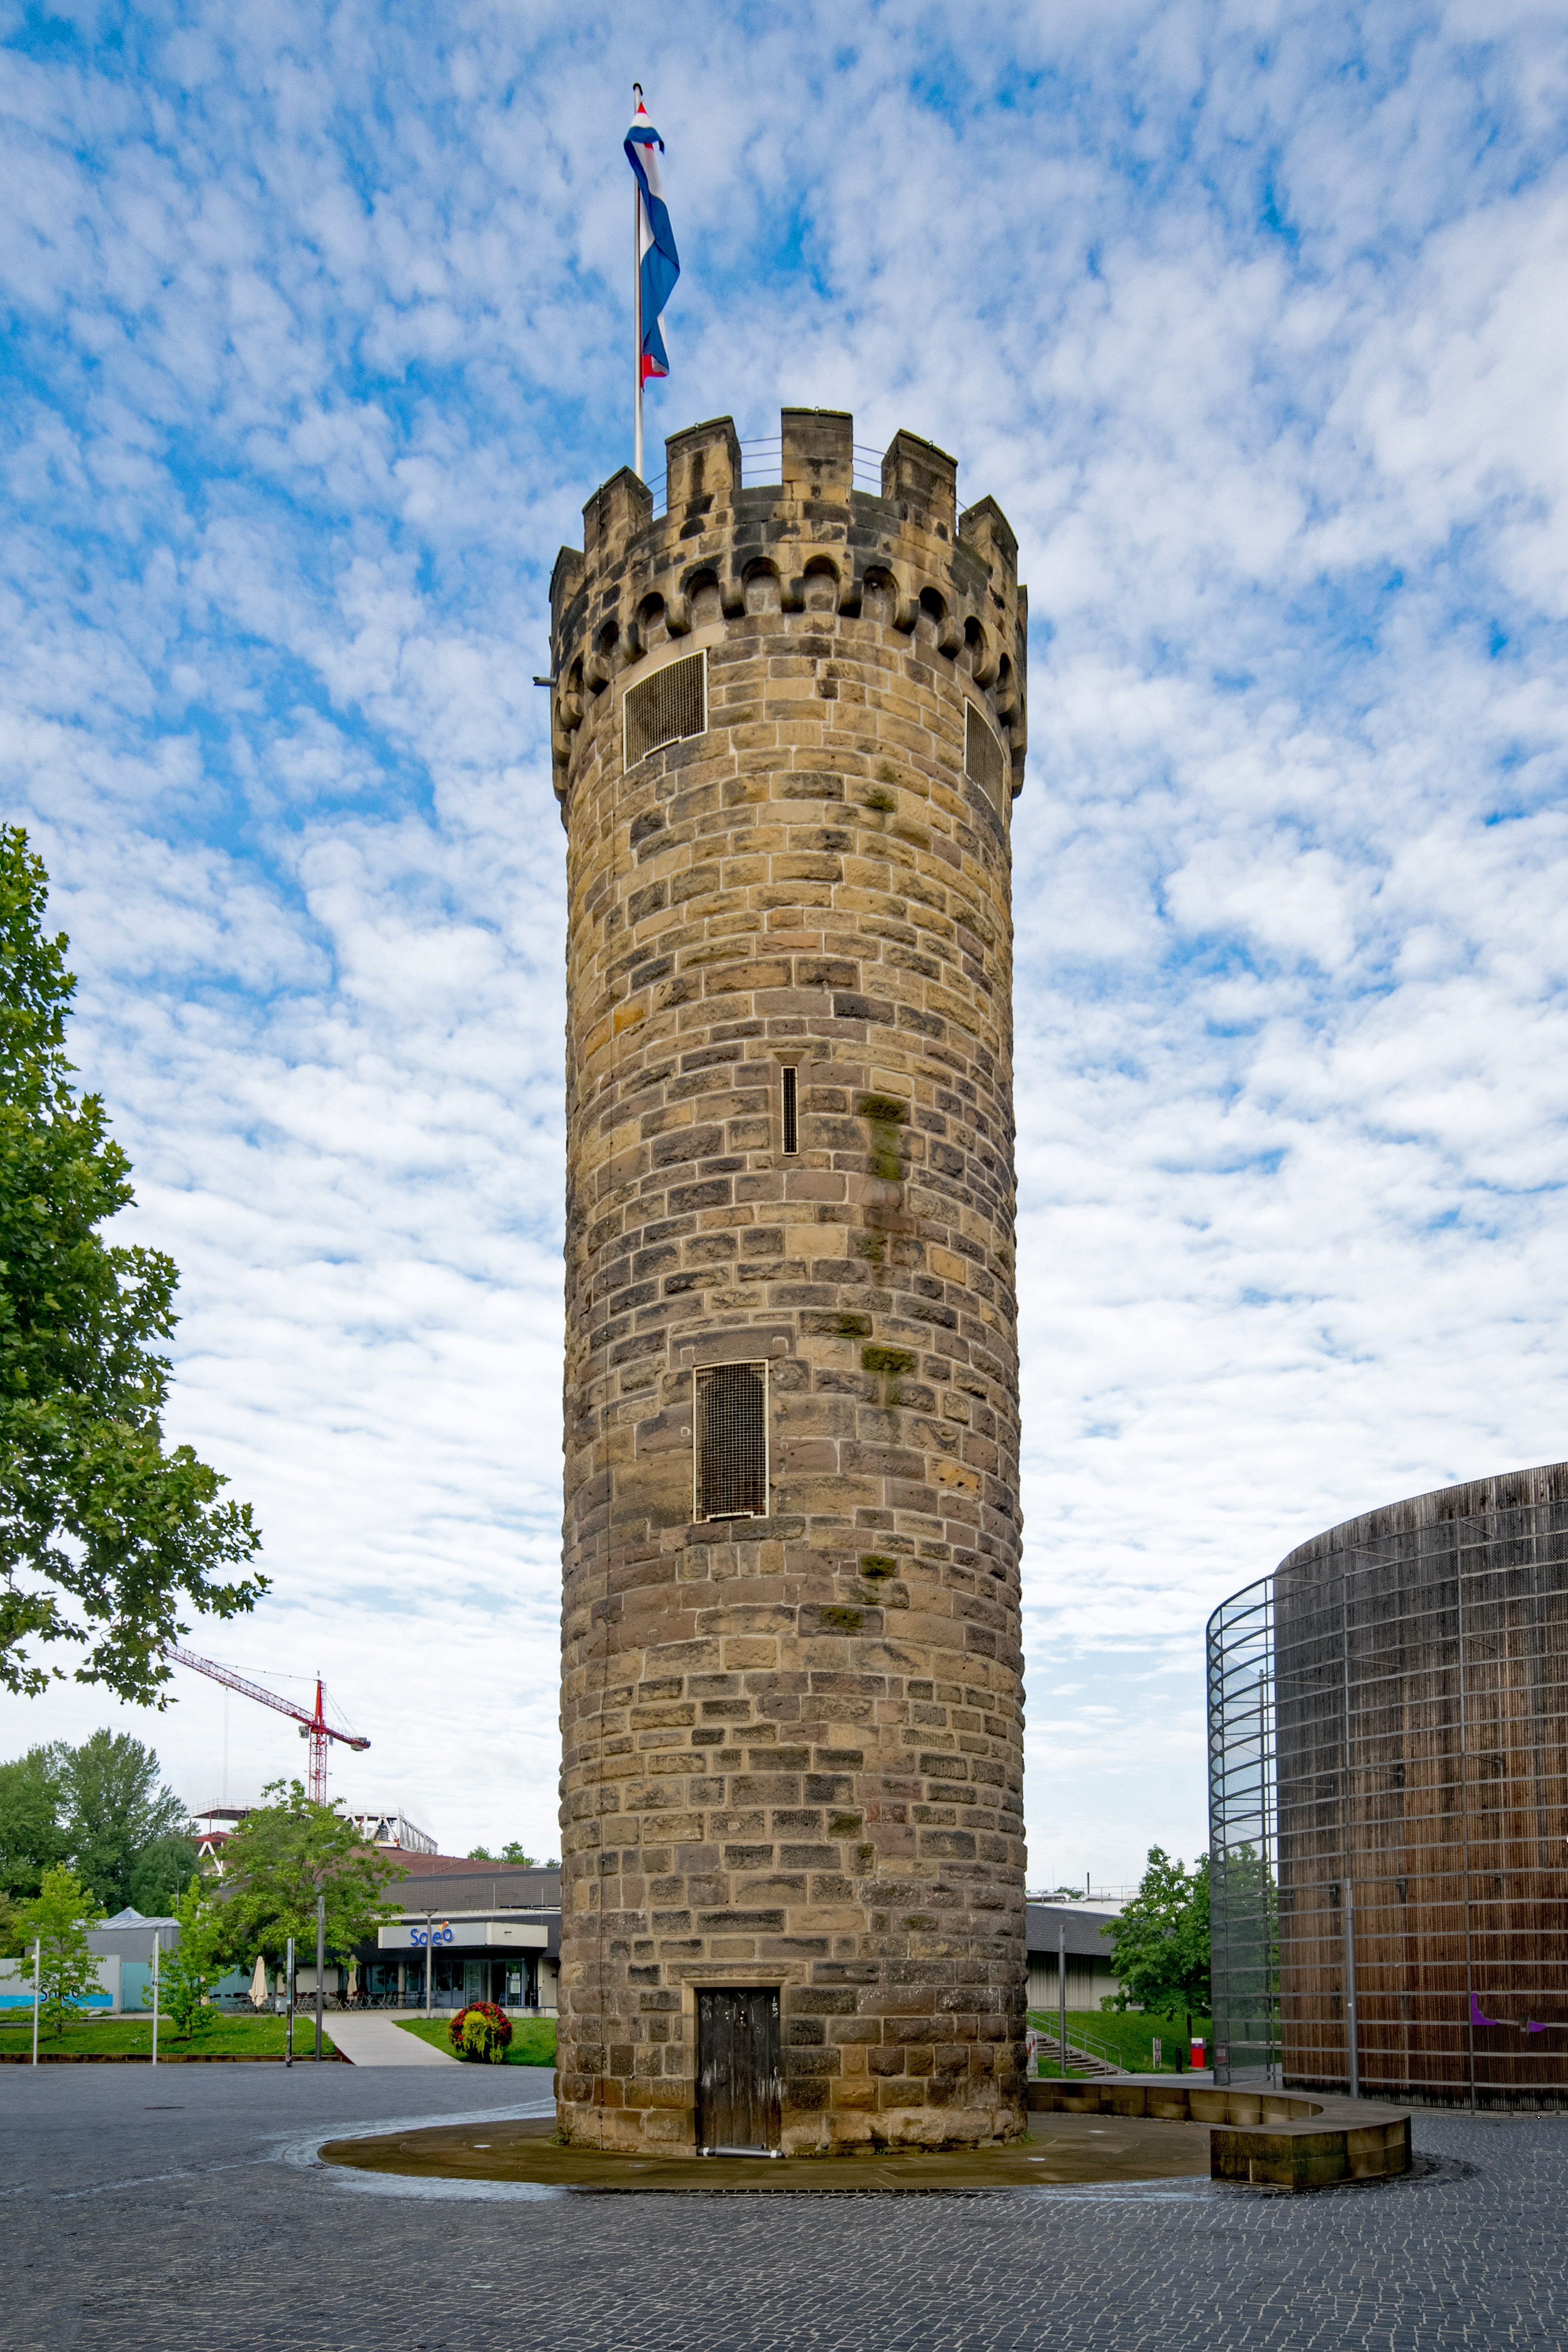 описание башен